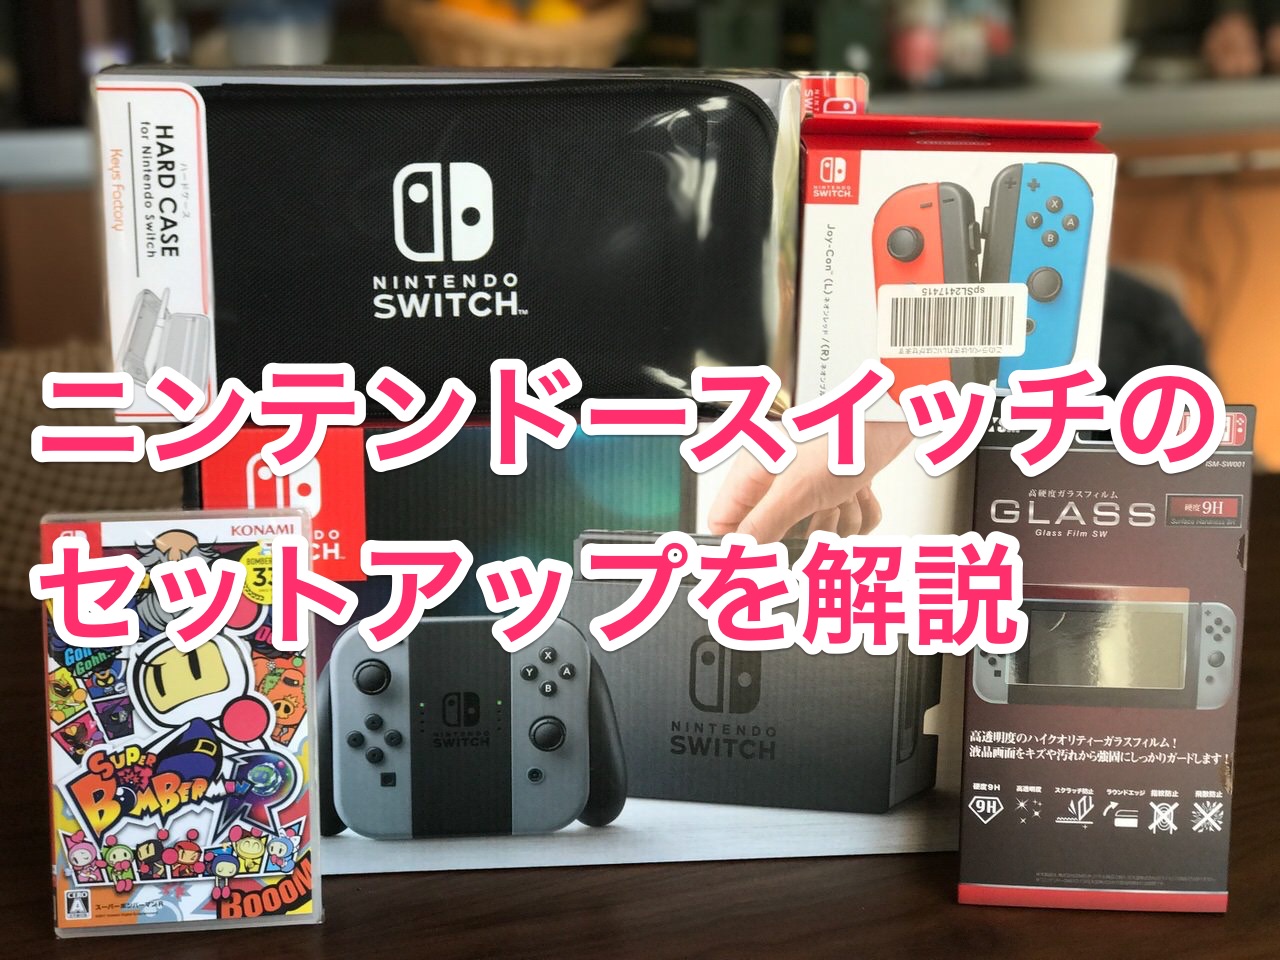 Nintendo switch setup 6747